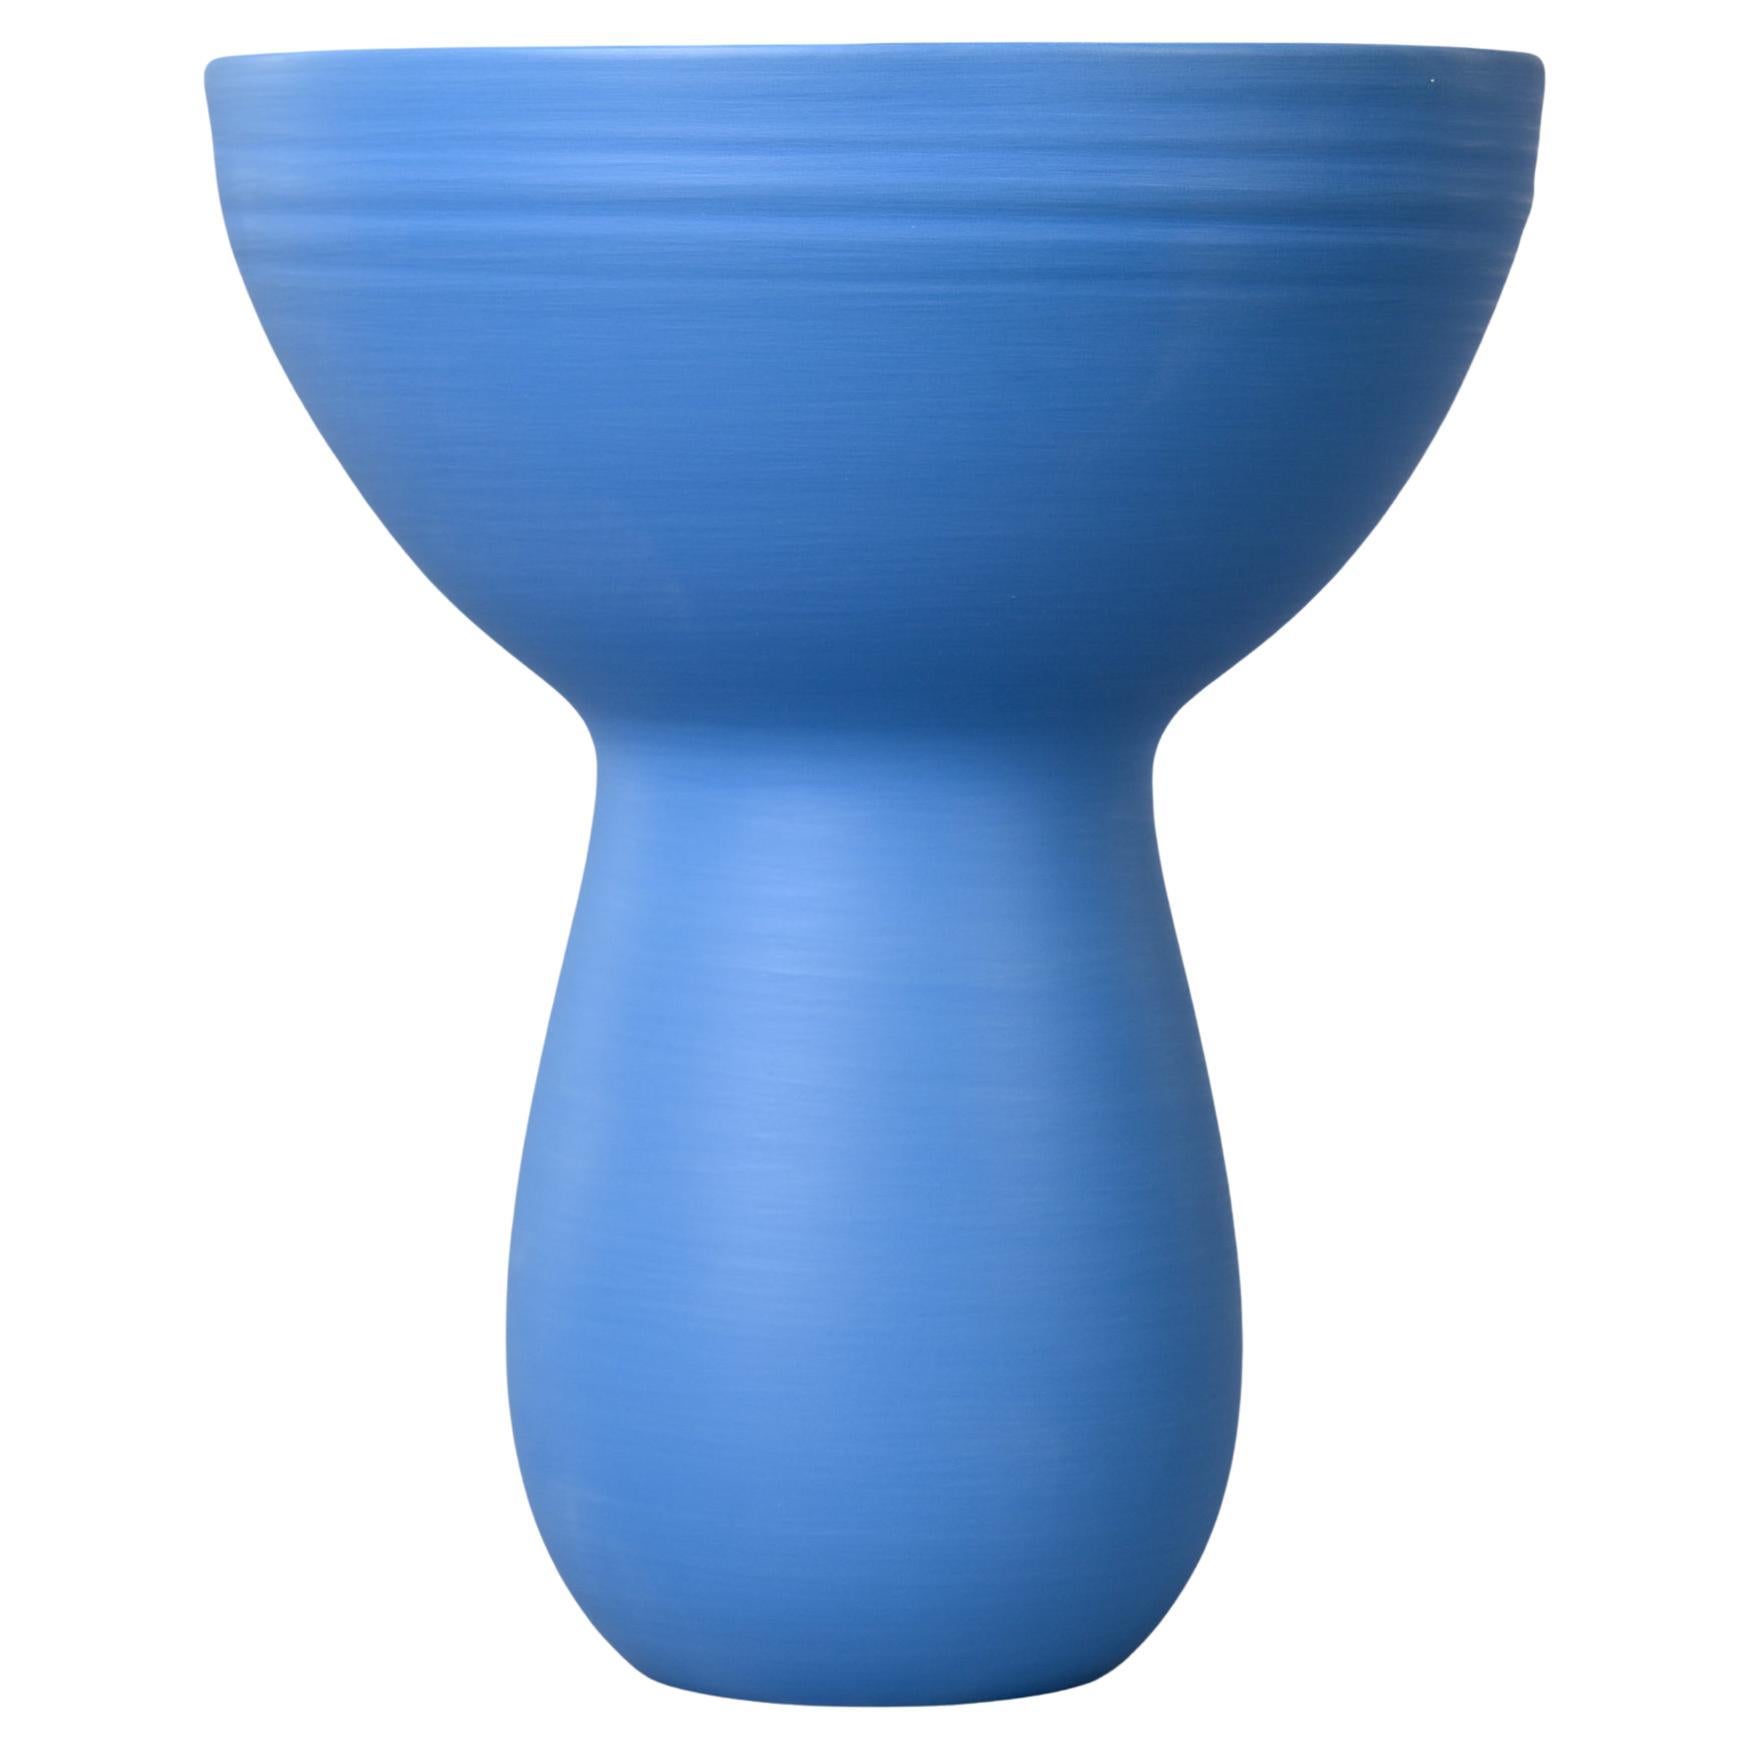 New Rina Menardi Cornflower Blue Small Bouquet Vase For Sale